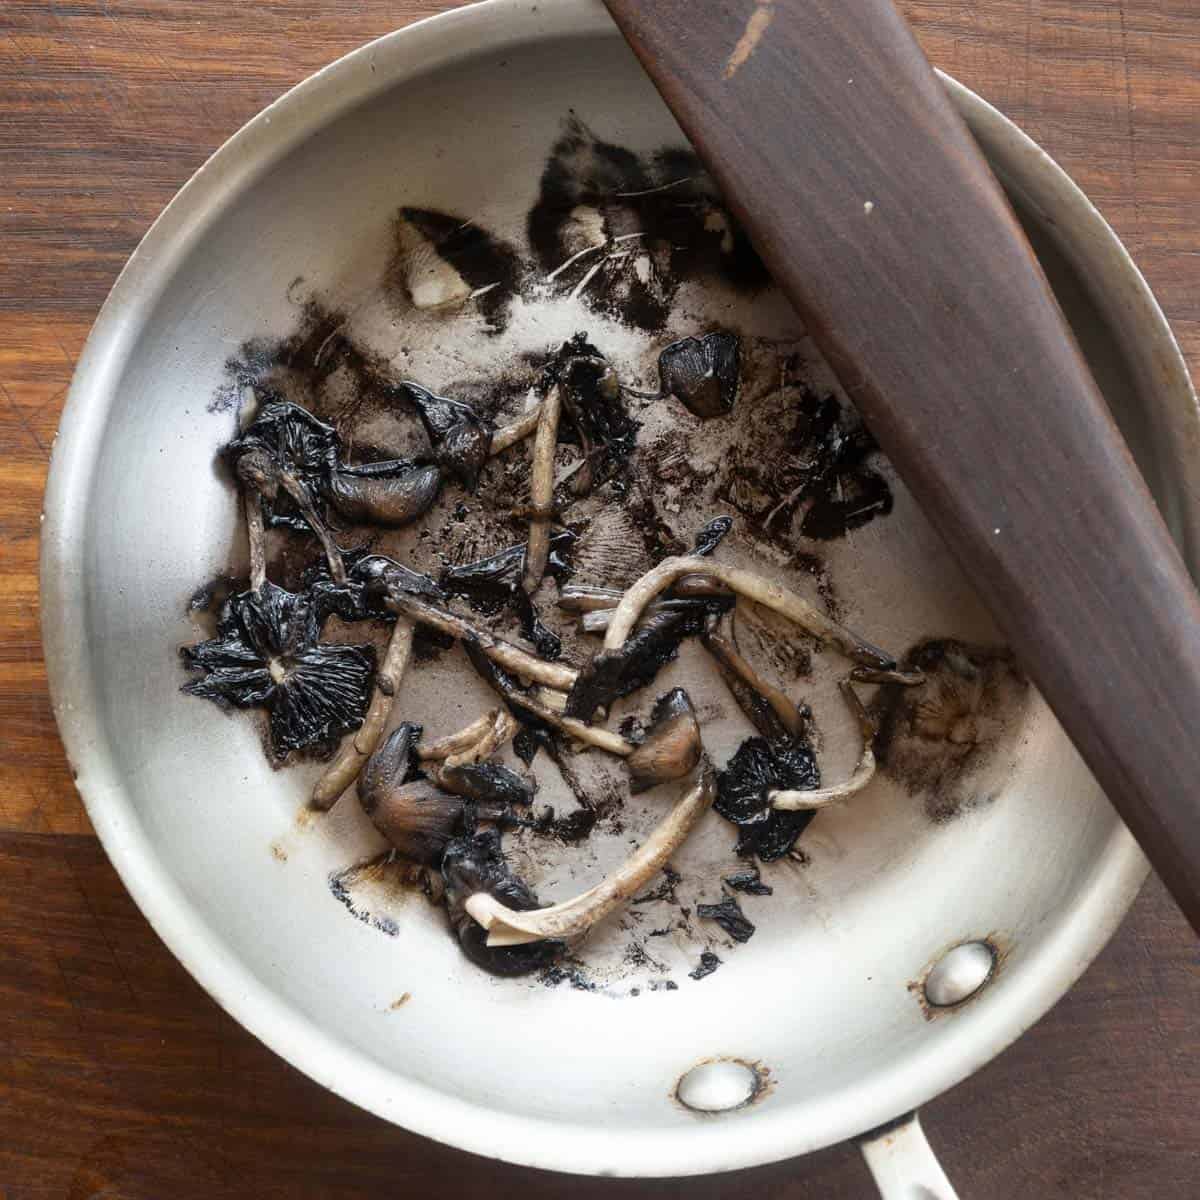 Cooking older mica cap mushroom in a pan. 